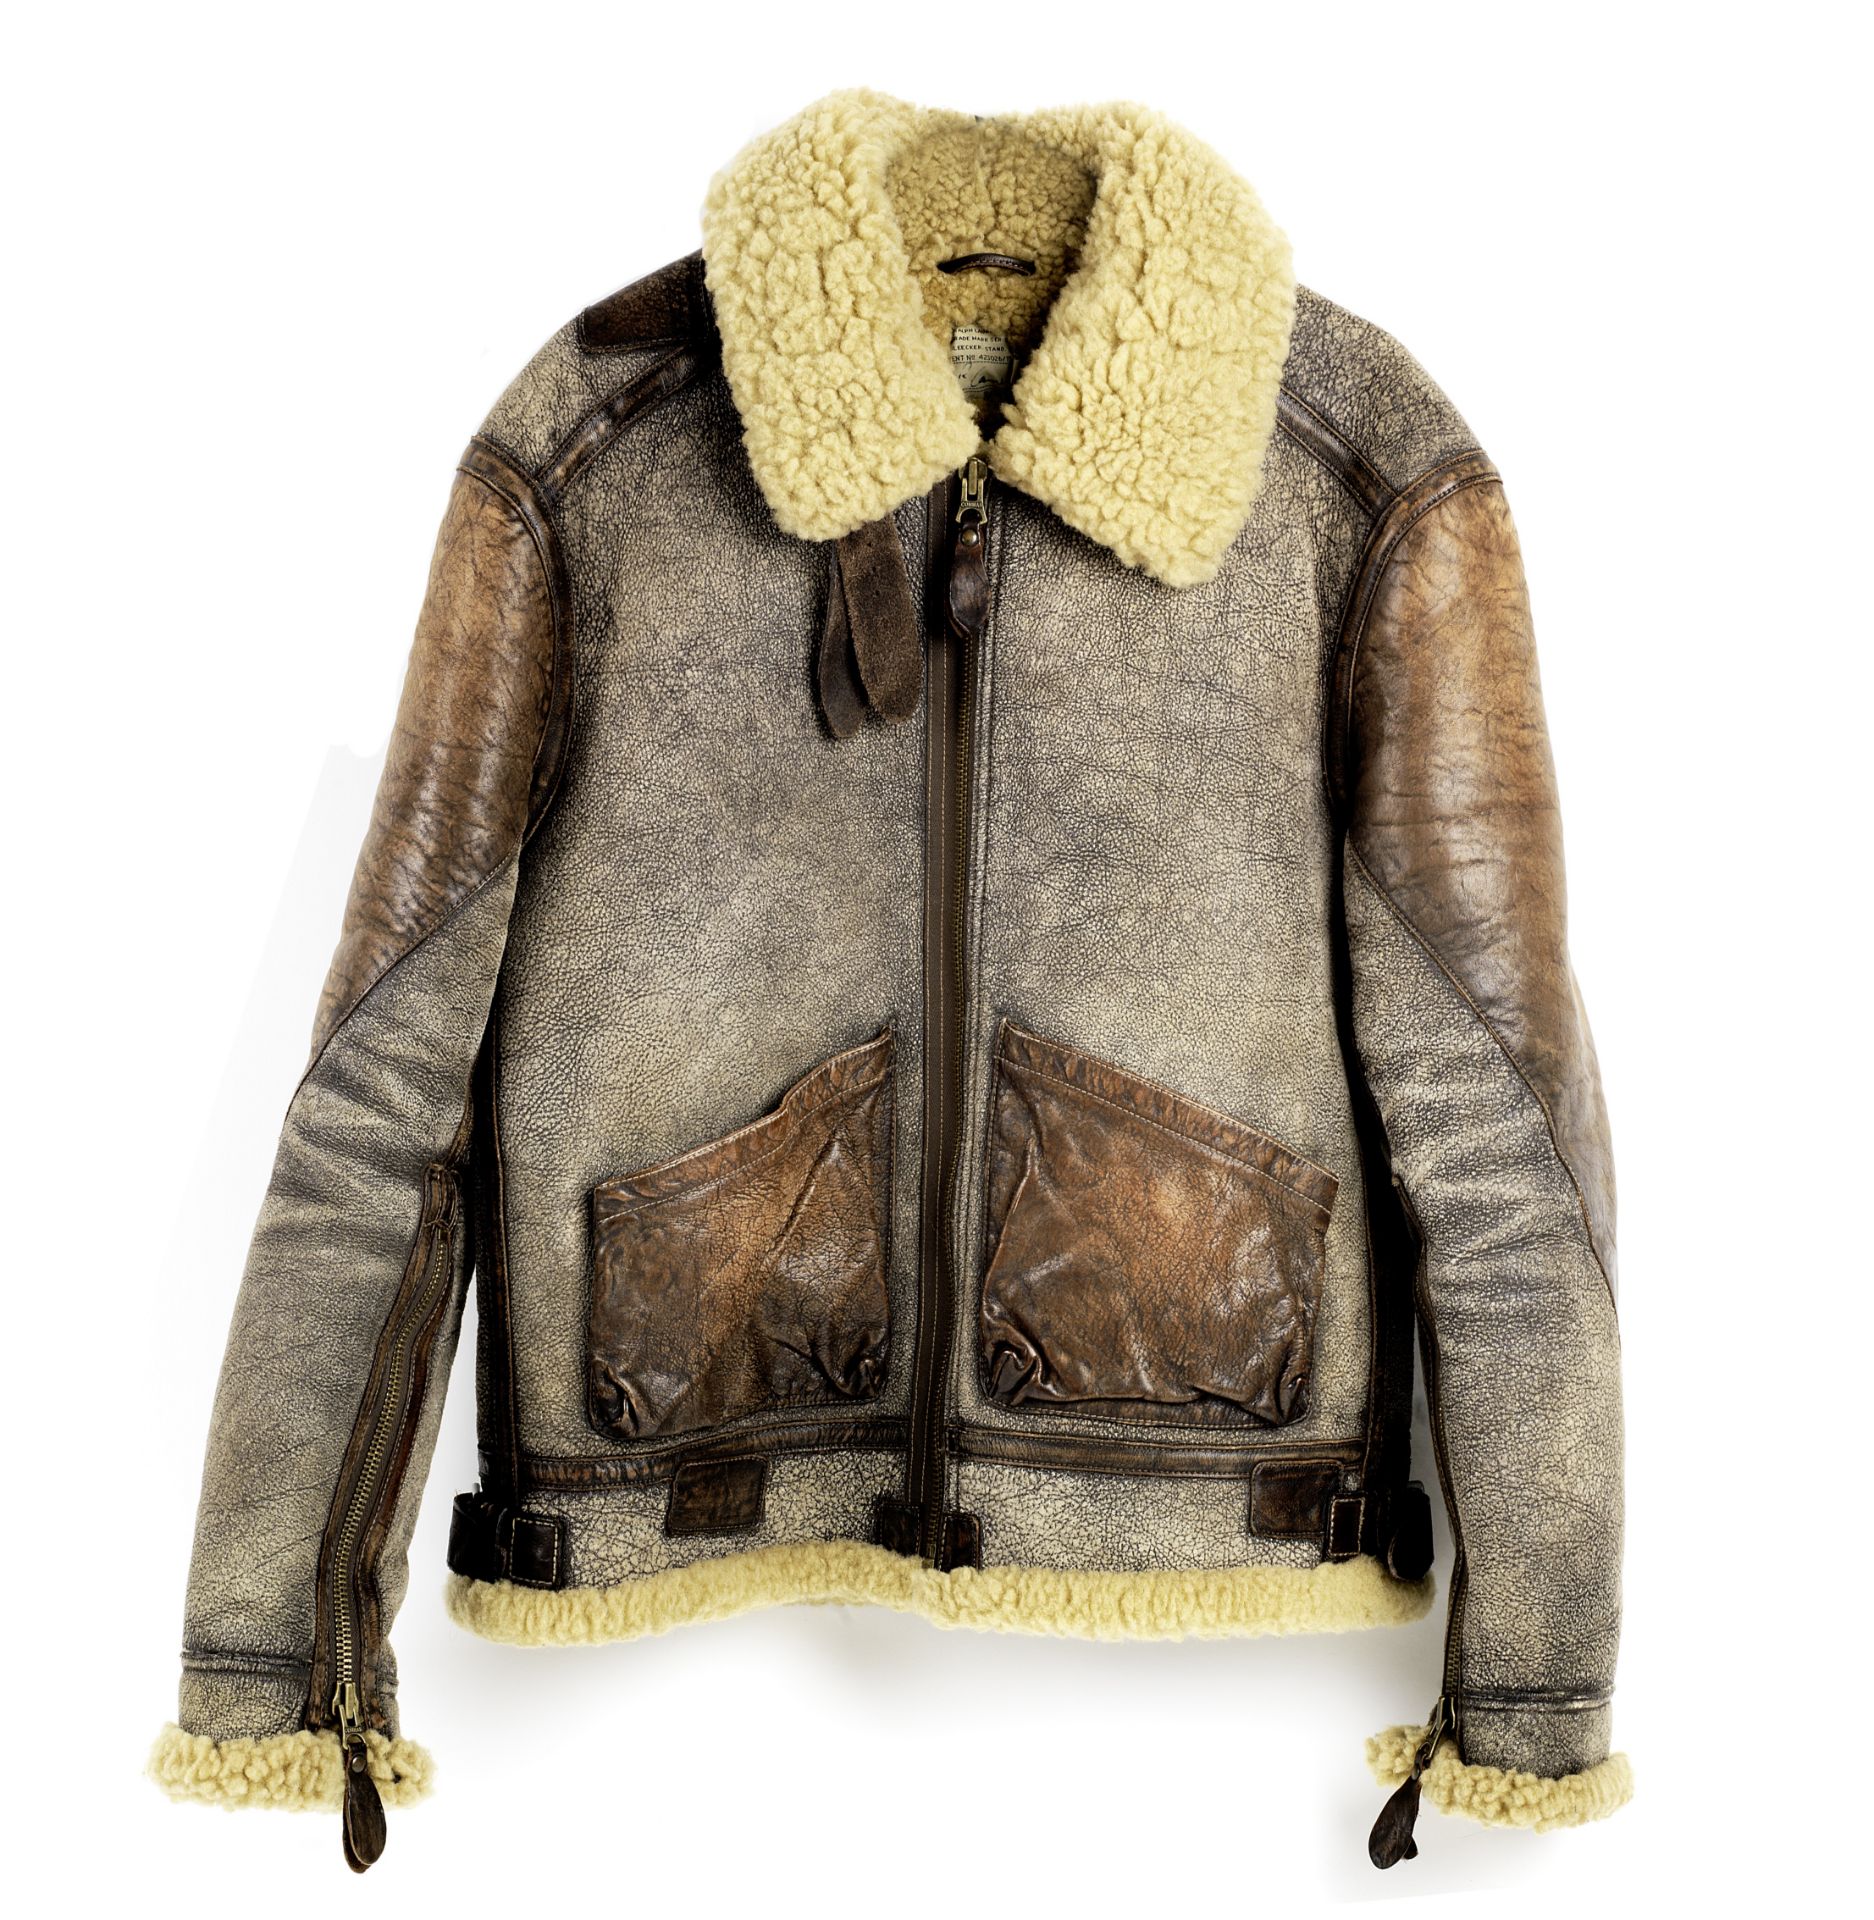 A Sheepskin flying jacket by Ralph Lauren, modern,